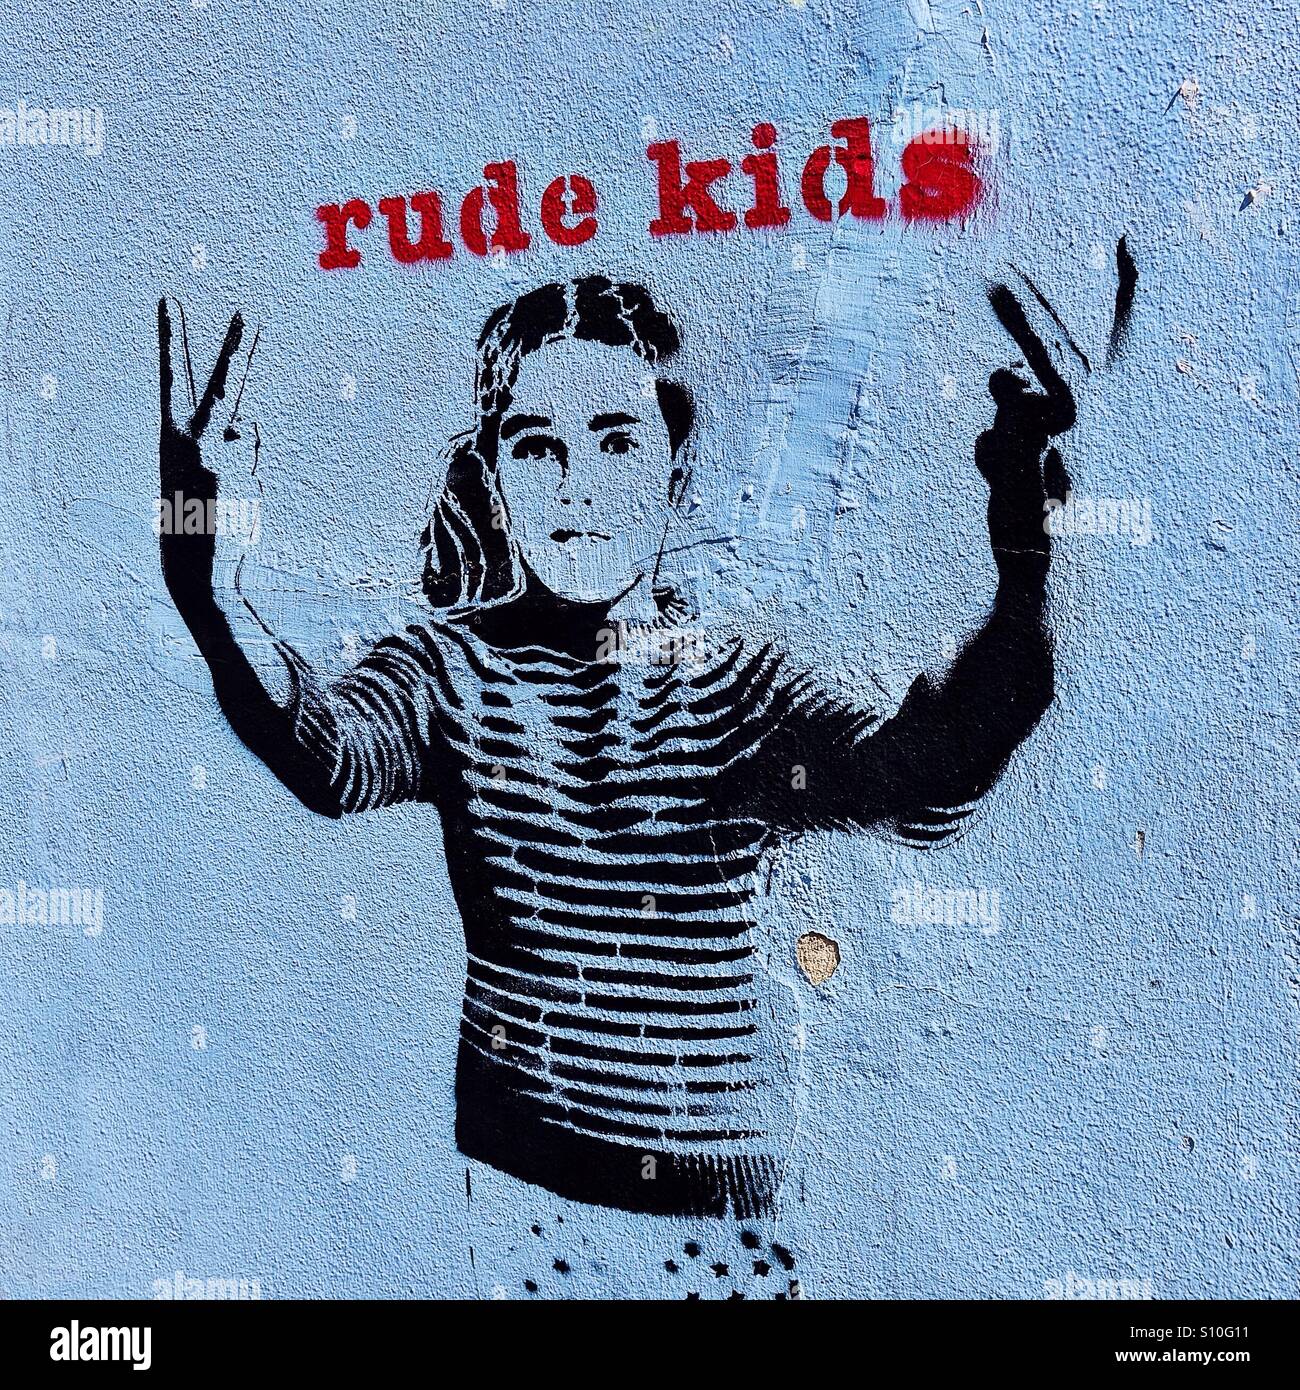 Rude kids graffiti by Dotmaster in Bermondsey South London Stock Photo